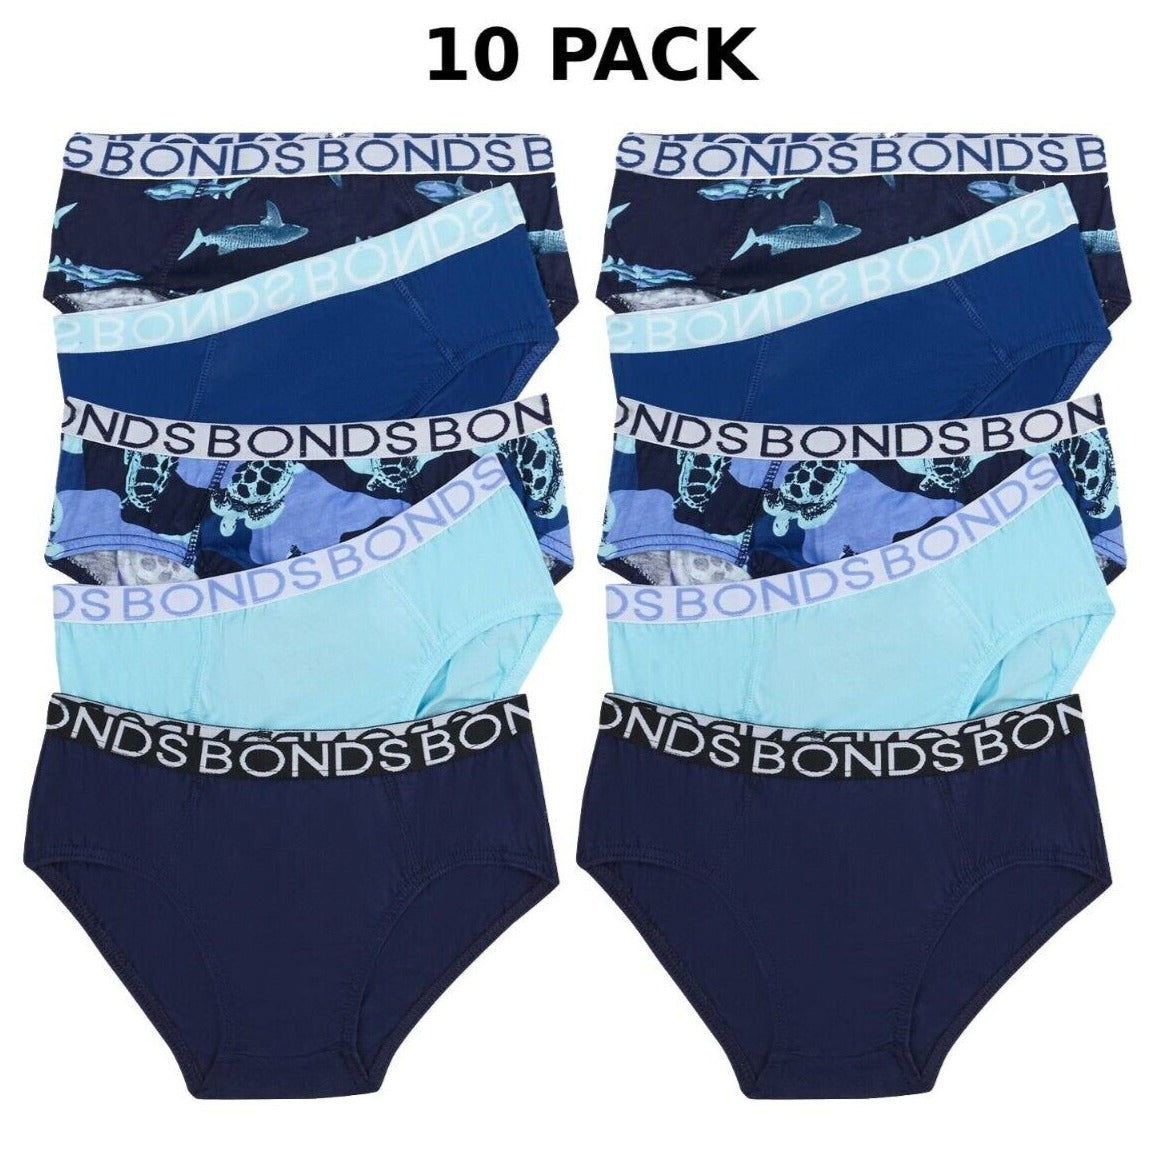 Bonds Boys Brief Soft Stretchable Comfortable Contoured Fit 10 Pack UWNU5A MI6